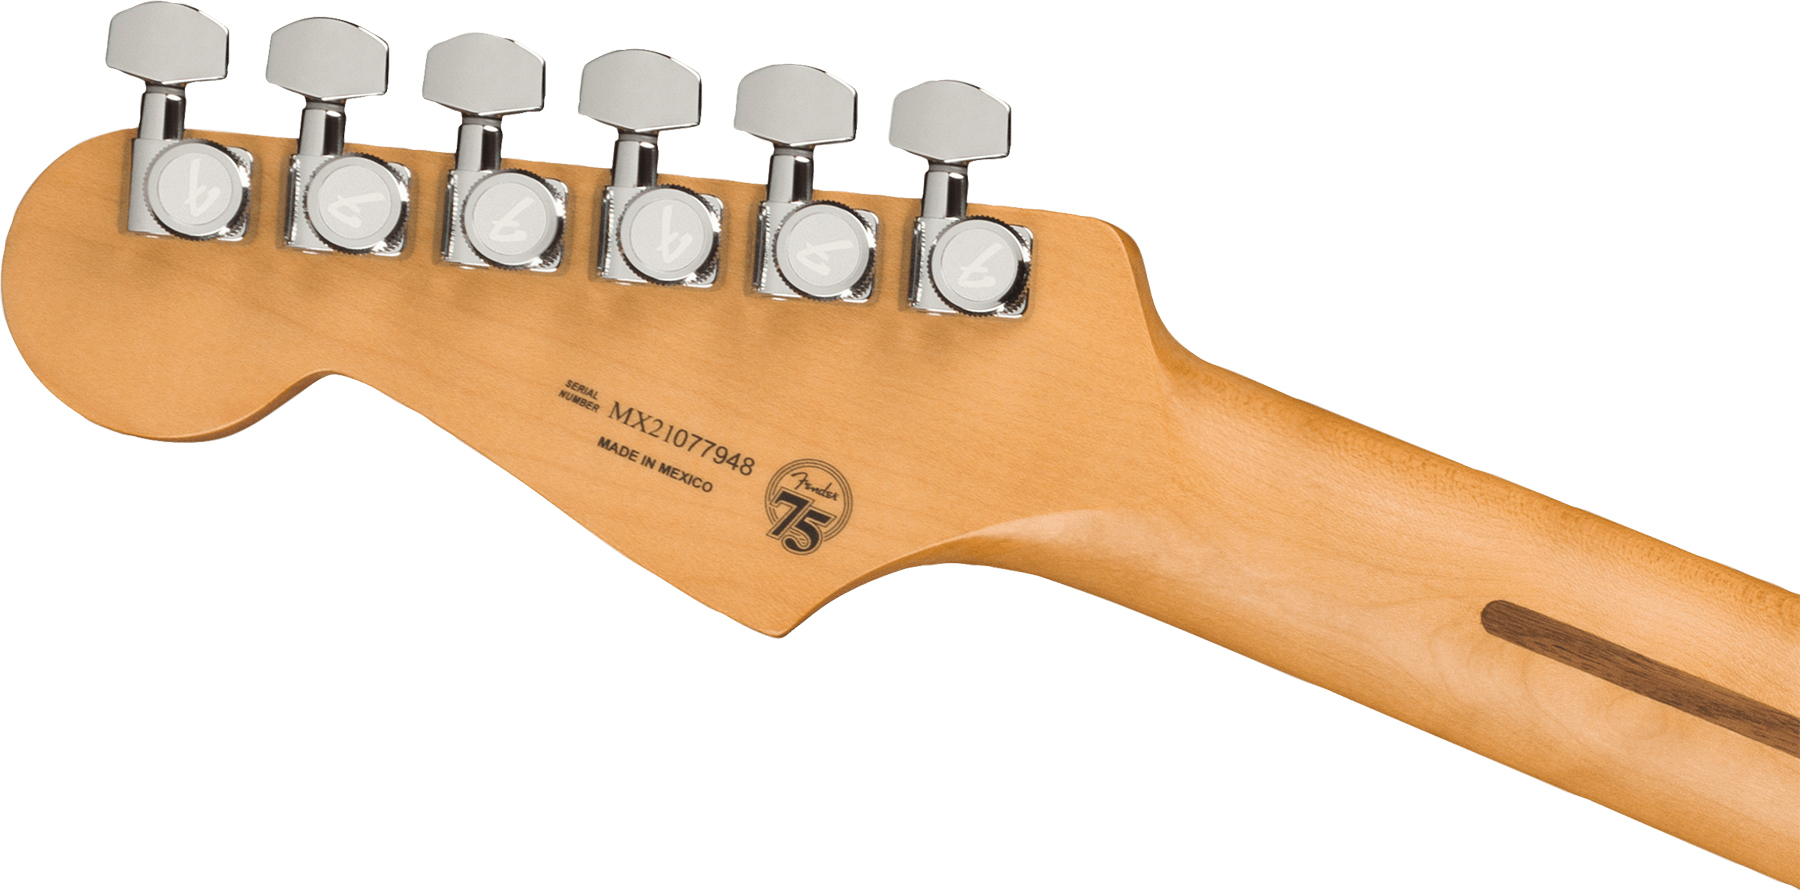 Fender Strat Player Plus Mex 3s Trem Pf - Aged Candy Apple Red - Guitare Électrique Forme Str - Variation 3